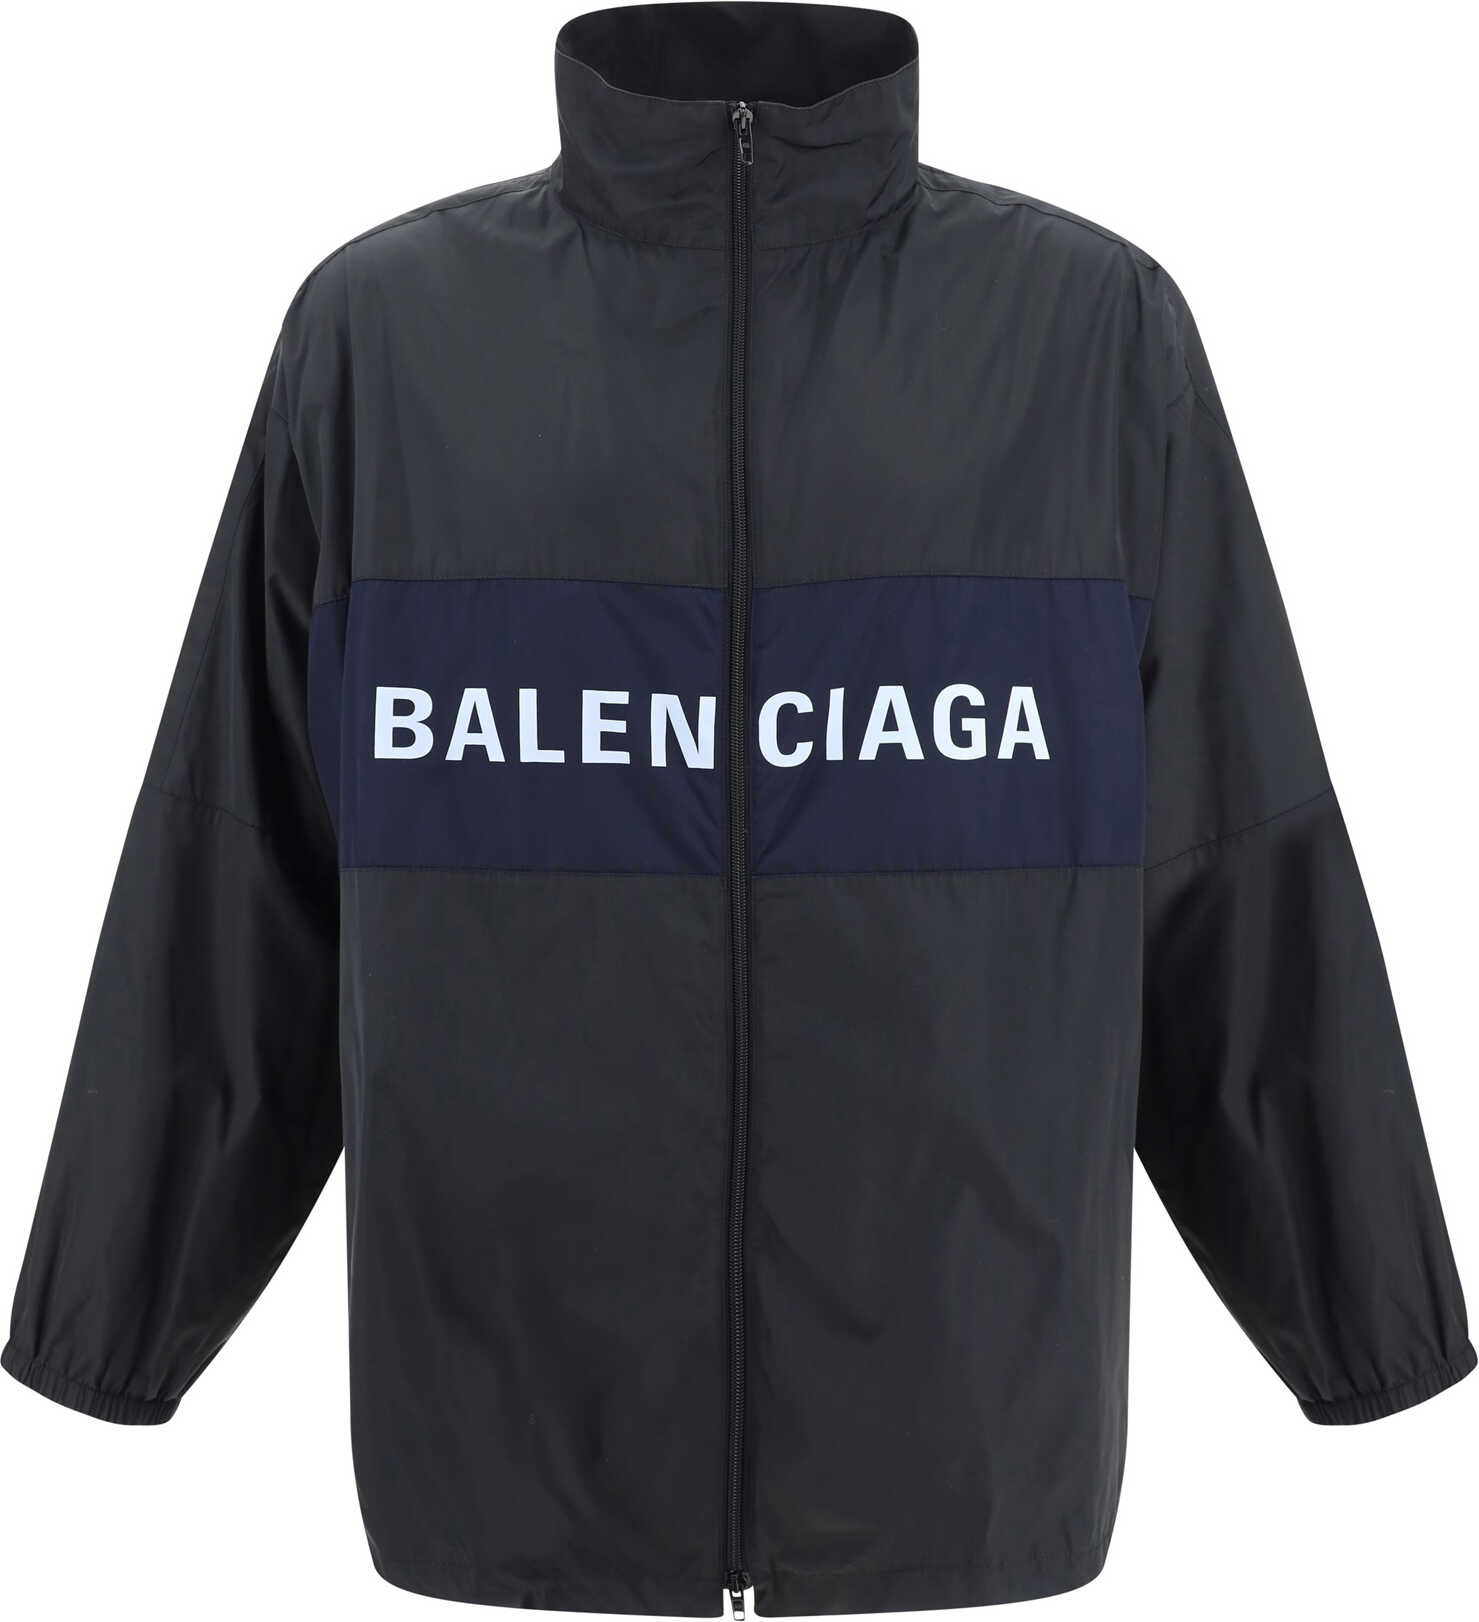 Balenciaga Jacket BLACK